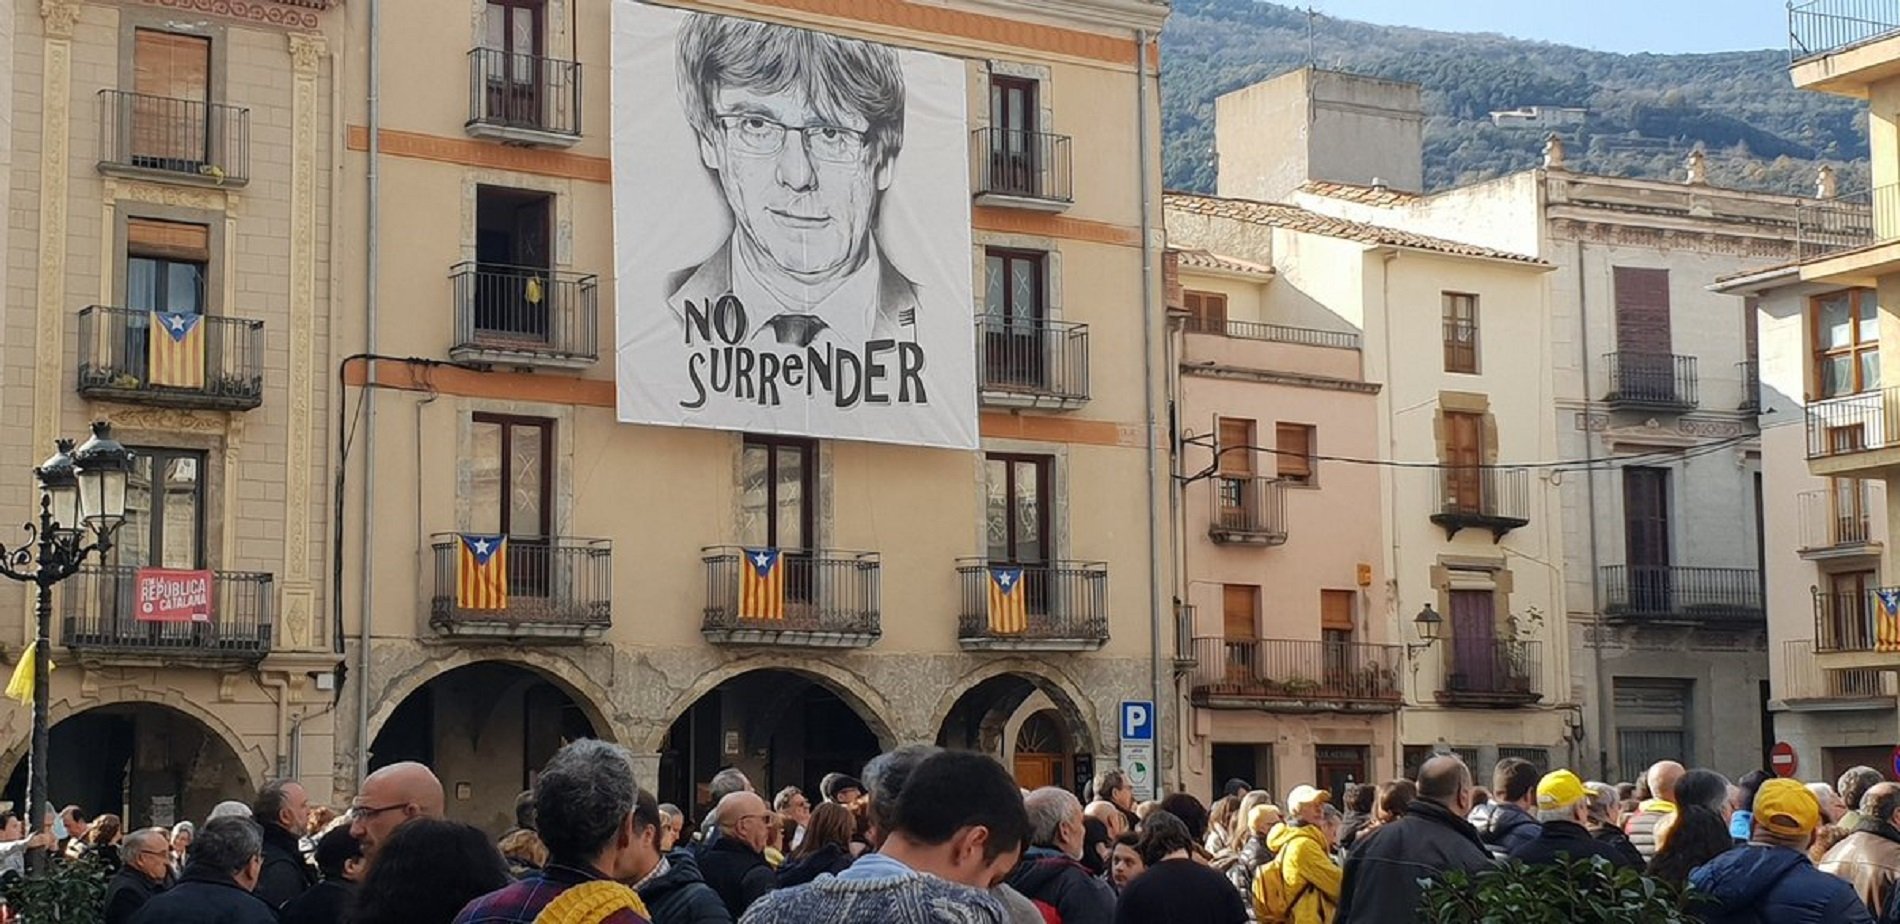 Carles Puigdemont's village Amer calls for his restoration as president